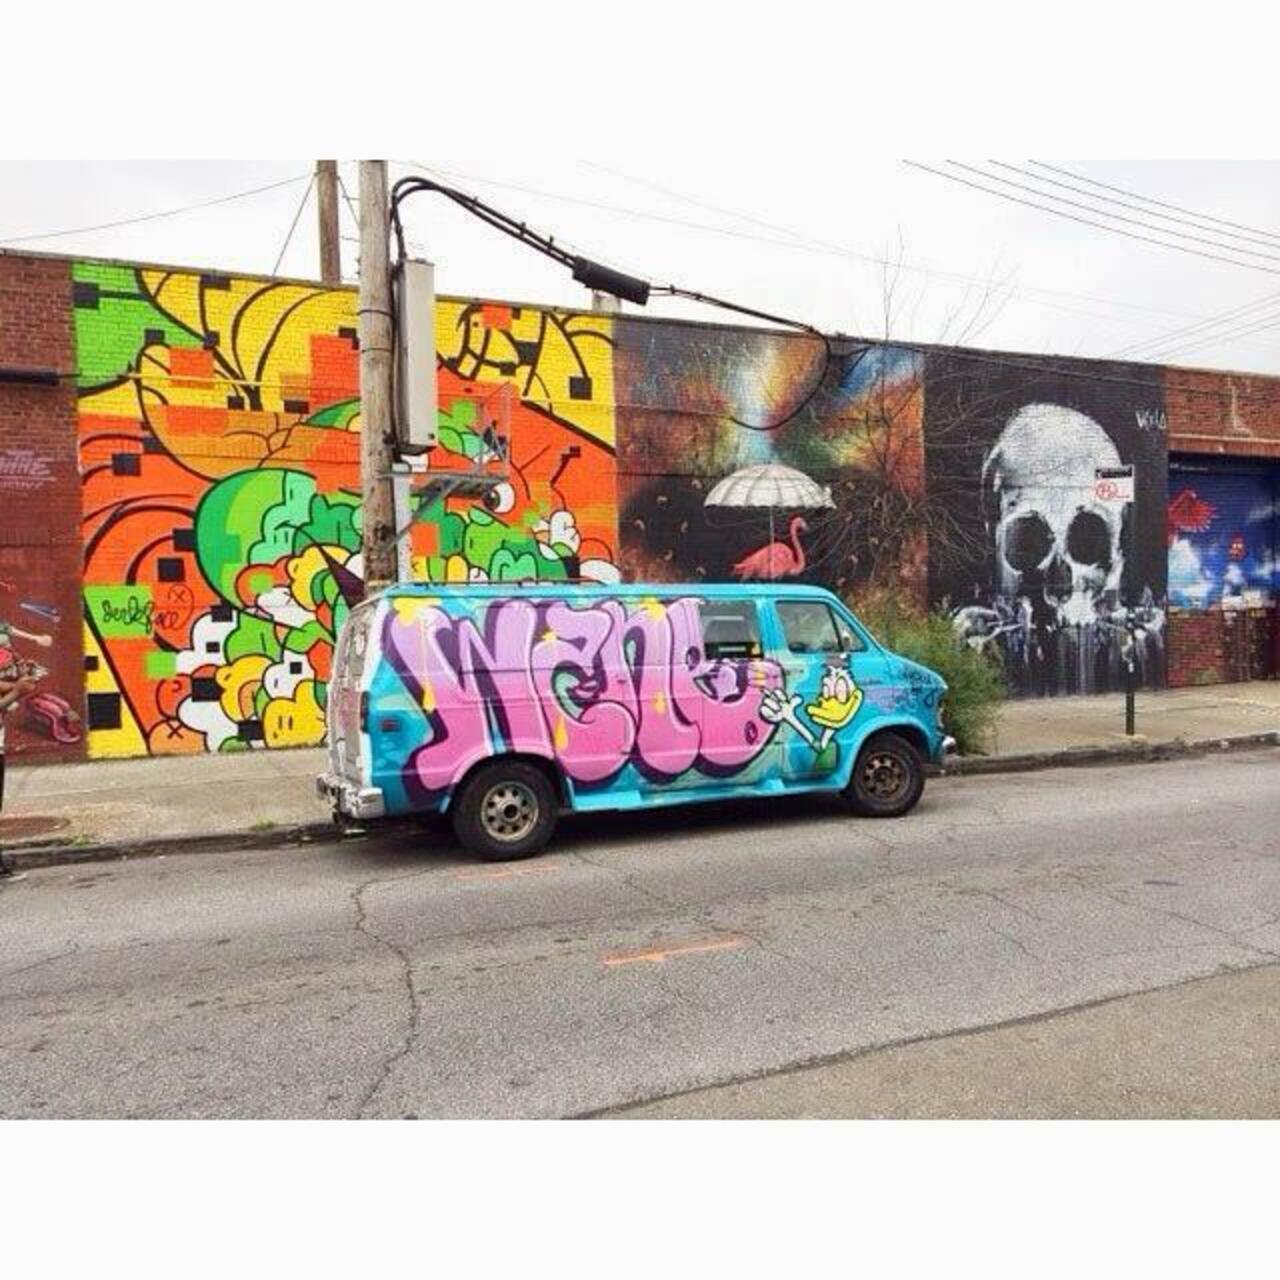 I saw this van in #brooklyn . Does anyone know of the #artist ? #streetart #graffiti http://t.co/CPwzJjuI66